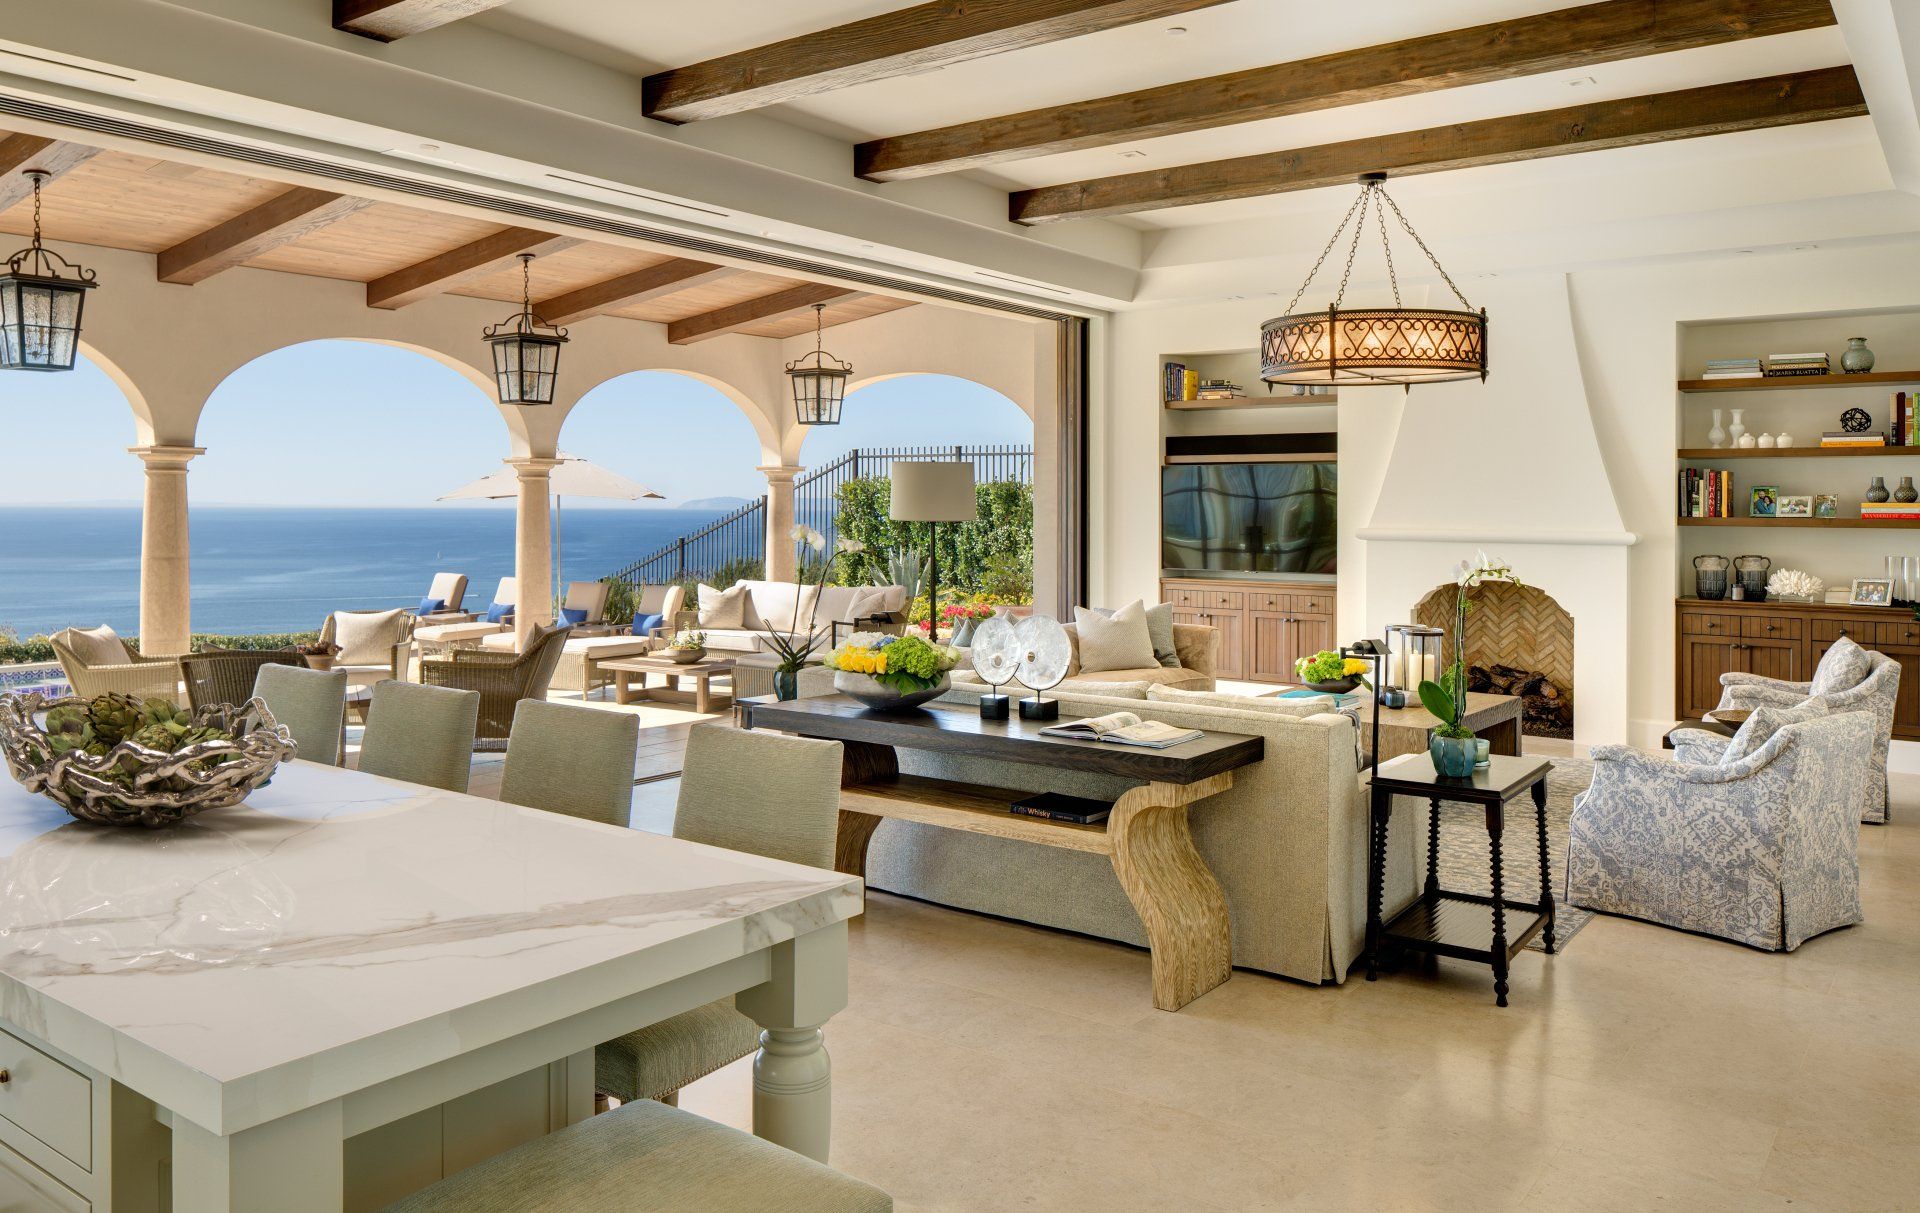 Newport Coast Santa Barbara home designed by Oatman